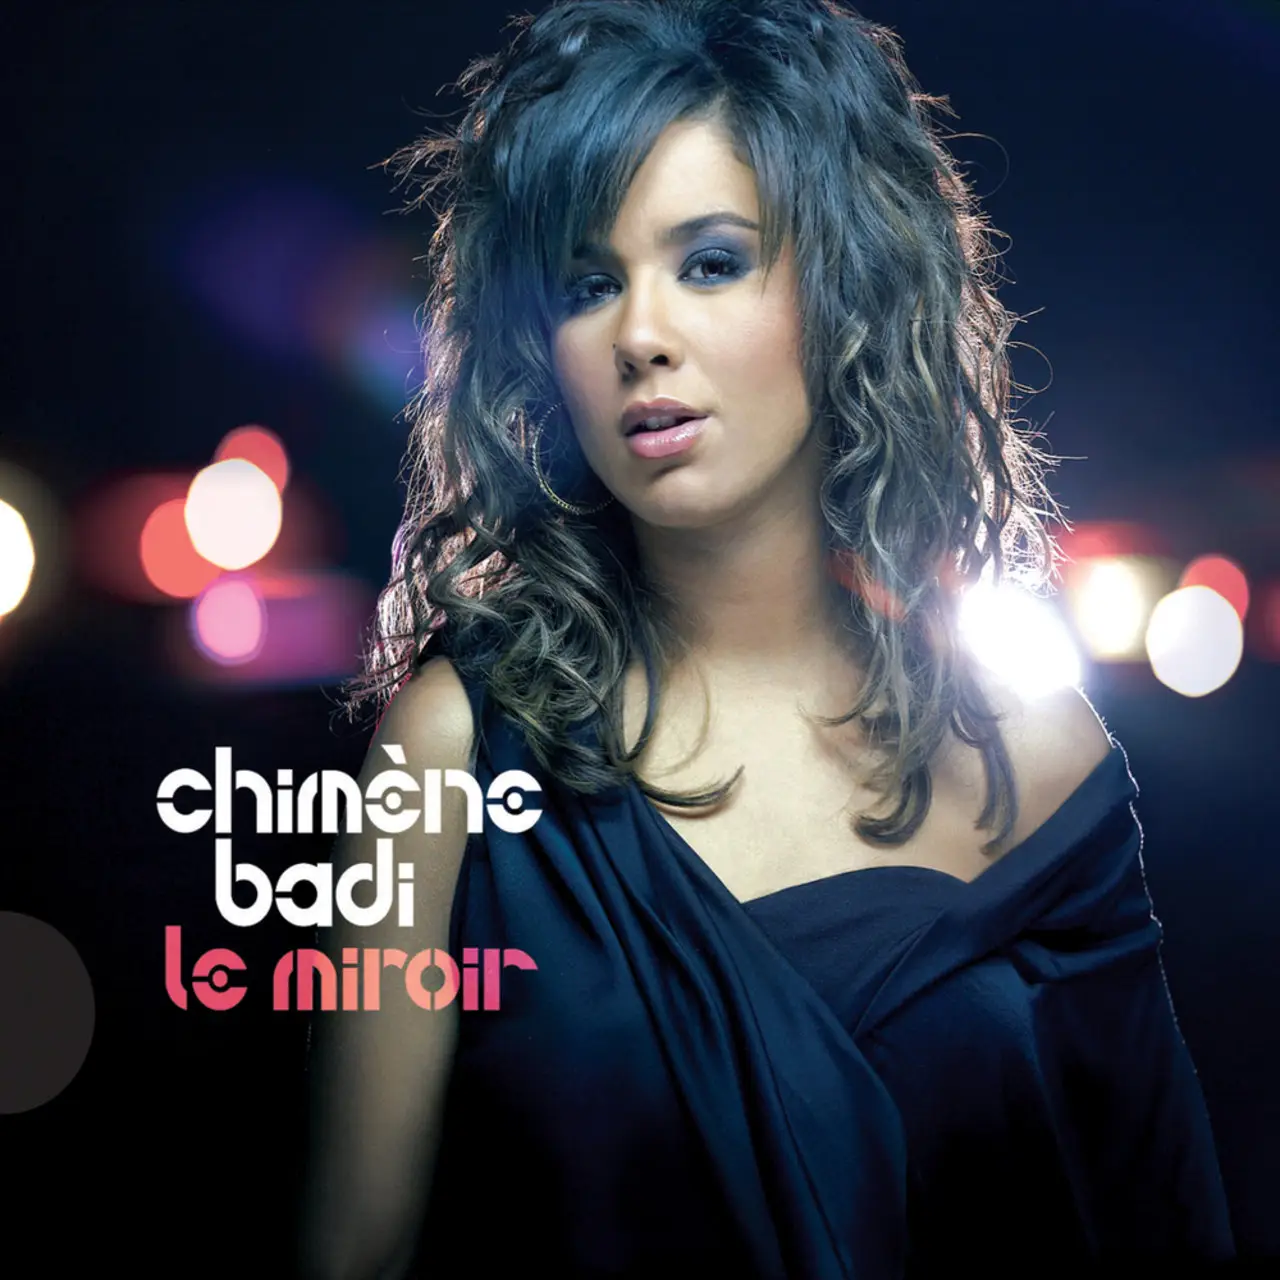 Бади слушать. Chimene. Чимене БАДИ.. Chimène Badi альбом le miroir. Chimene Badi фото.